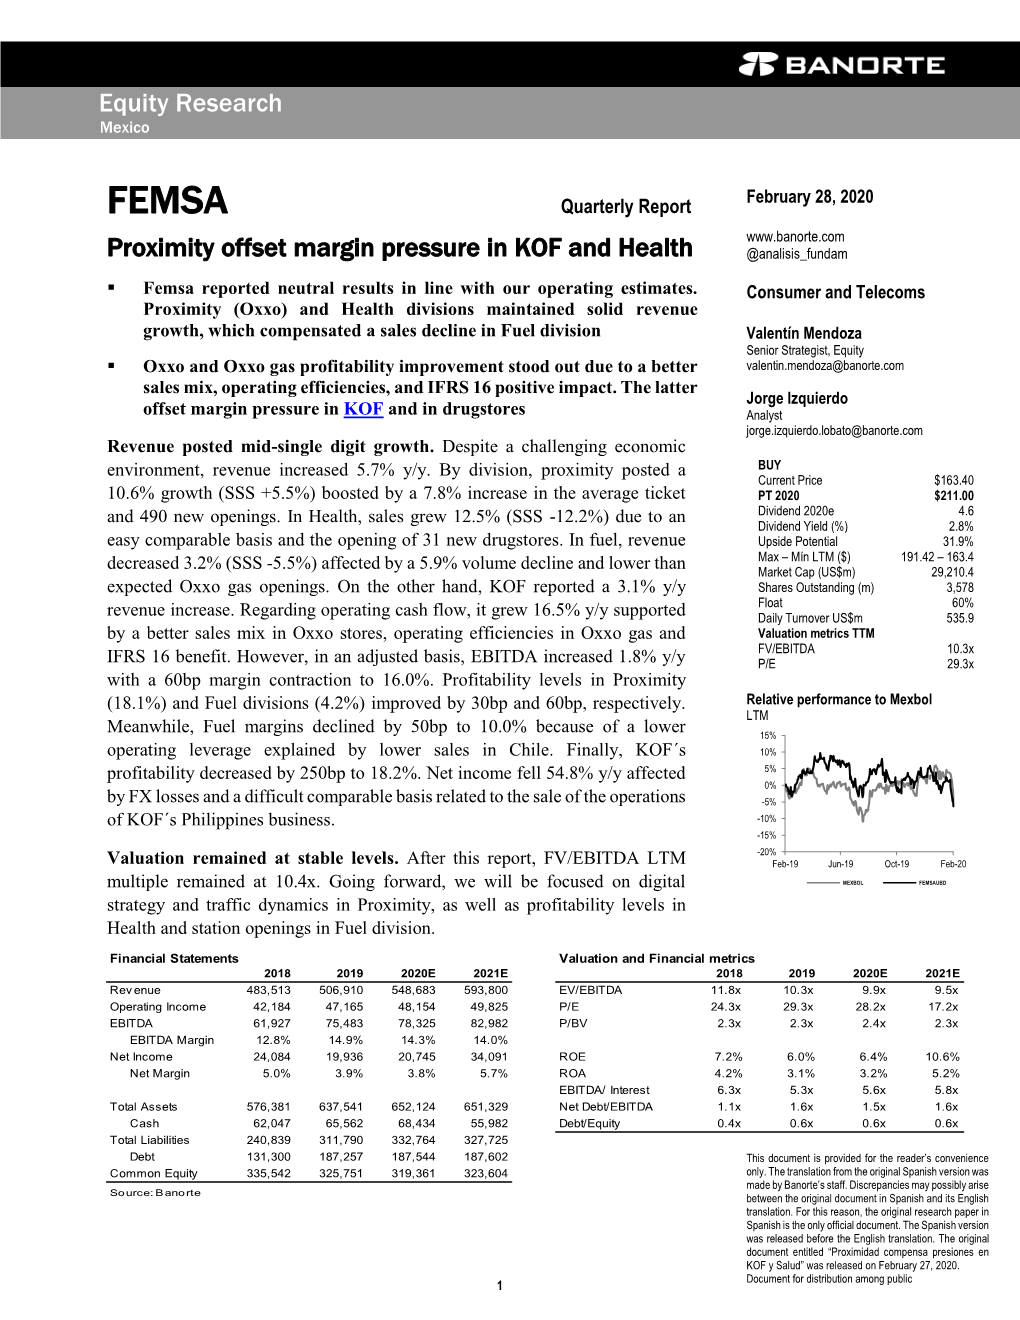 FEMSA Proximity Offset Margin Pressure in KOF and Health @Analisis Fundam